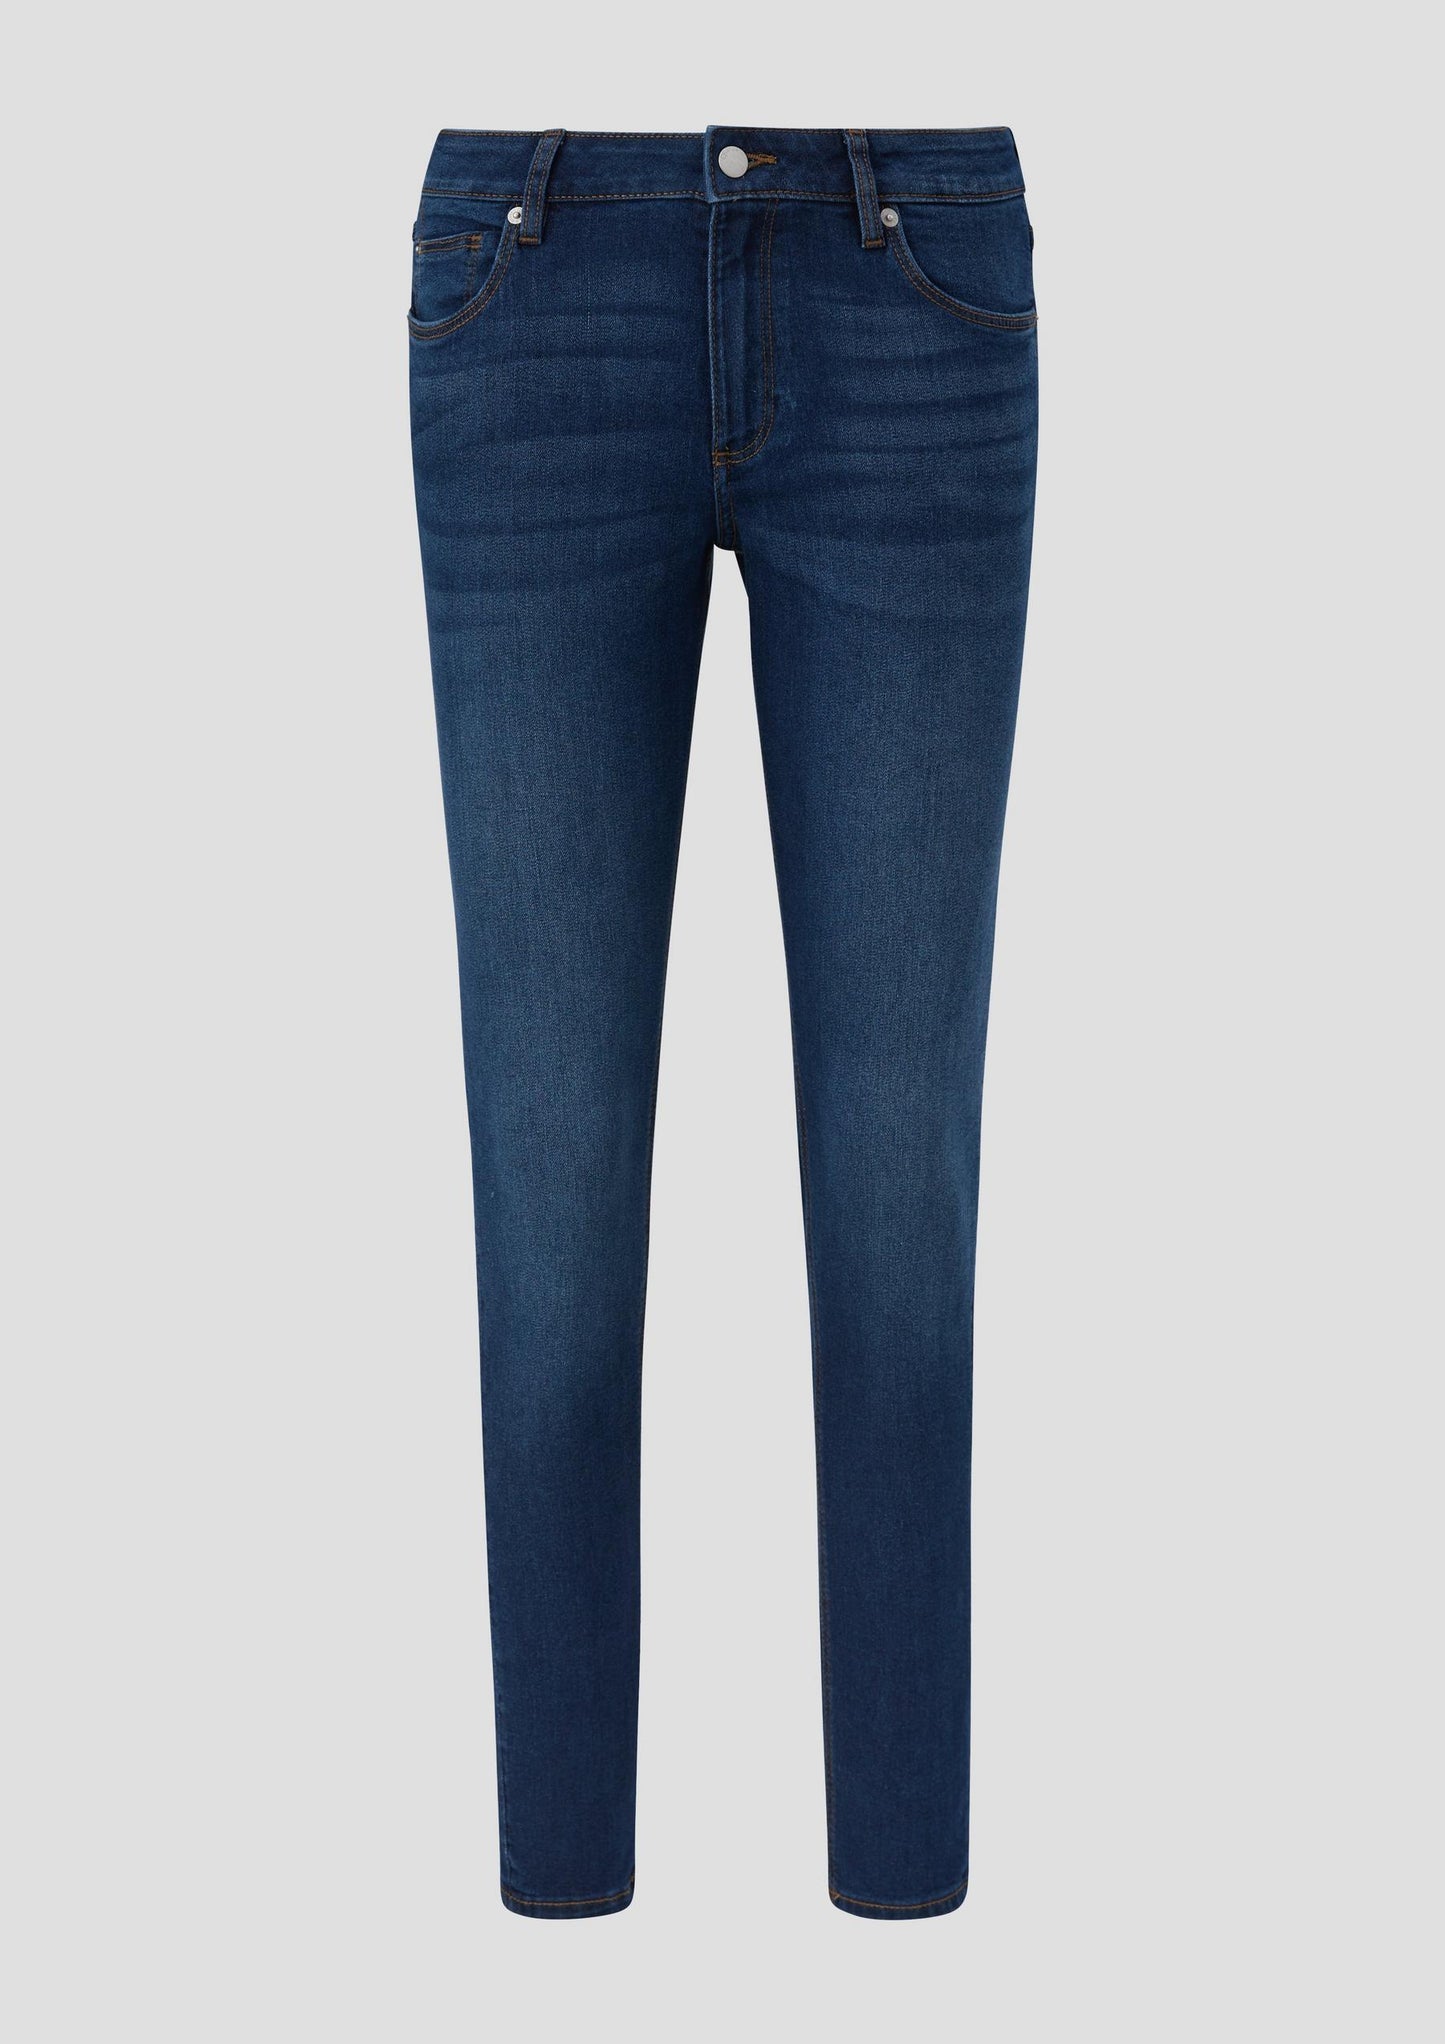 QS - Jeans Sadie / Skinny Fit / Mid Rise / Skinny Leg  - Farbe: dunkelblau